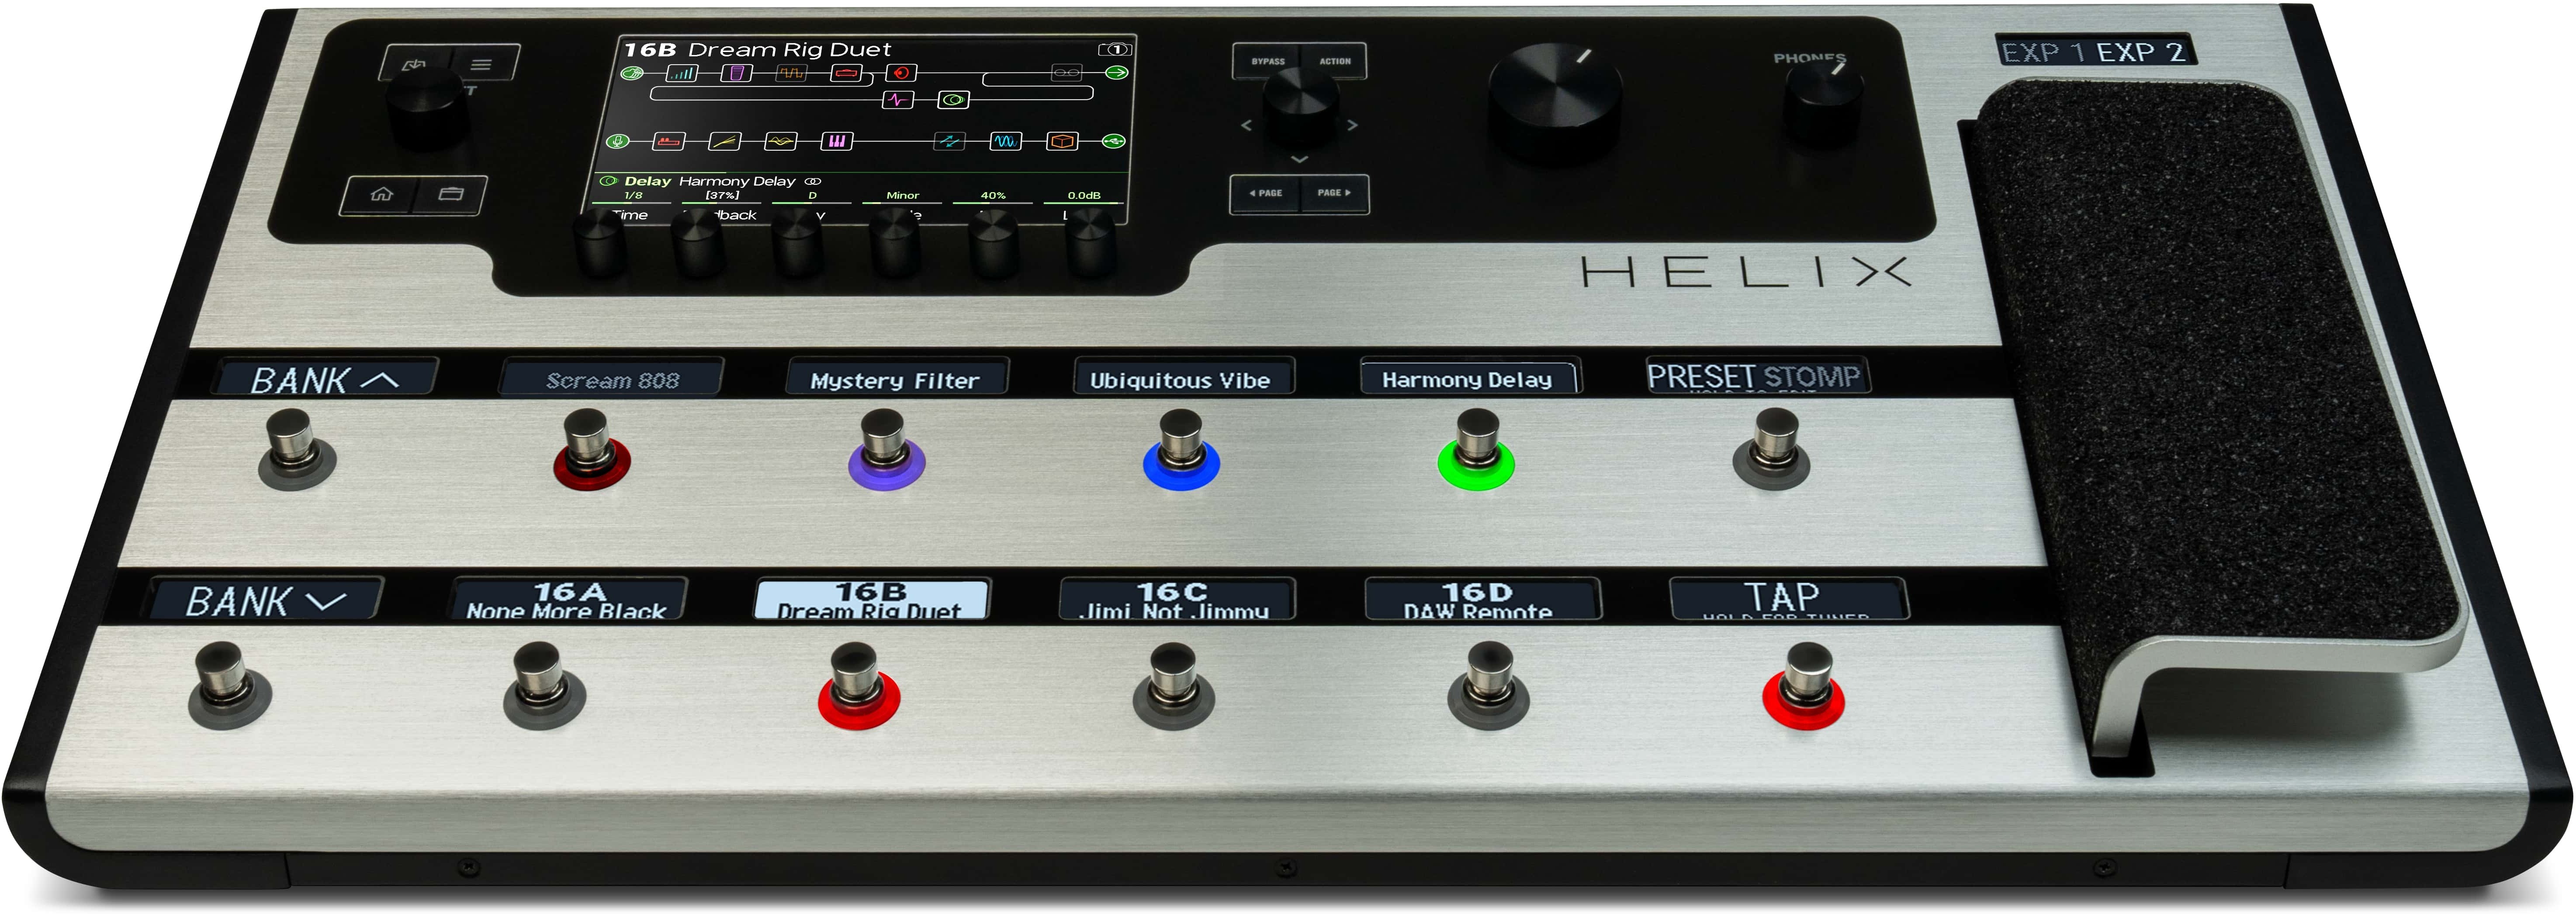 Line 6 Helix Floor Limited Edition Platinum Guitar Processor - Simulation ModÉlisation Ampli Guitare - Main picture